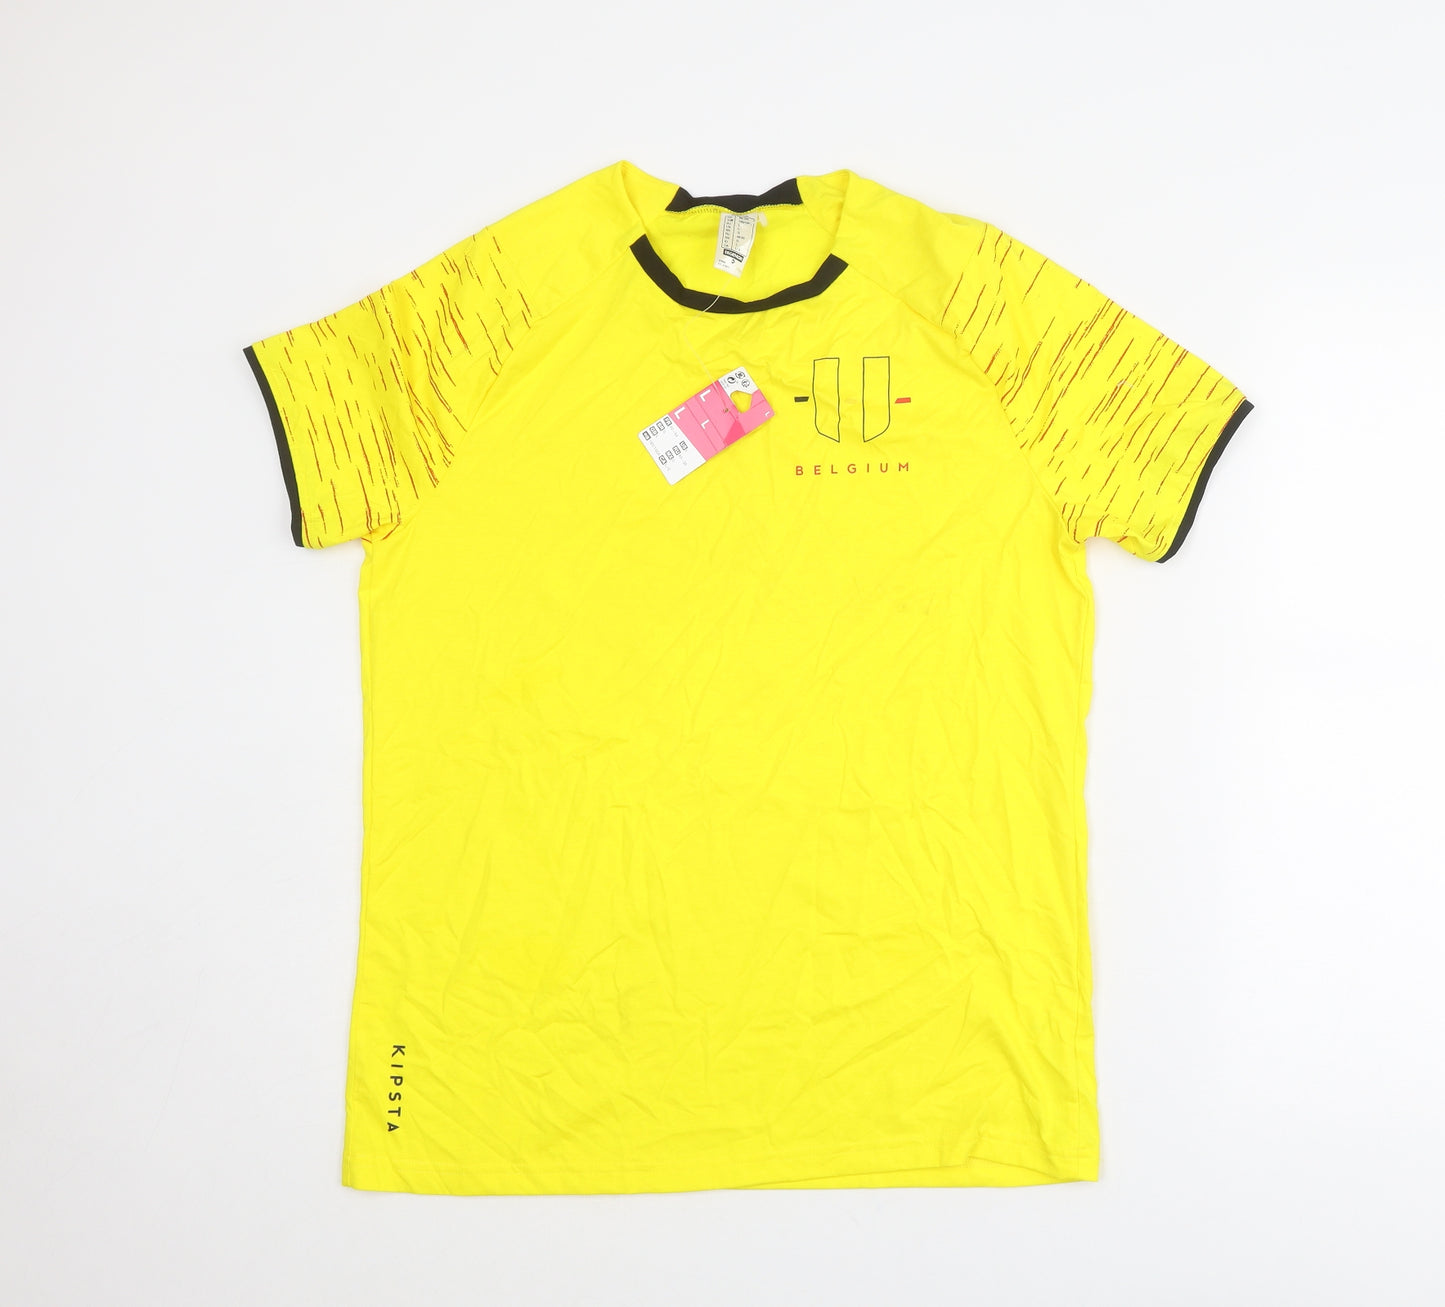 DECATHLON Mens Yellow Polyester T-Shirt Size L Crew Neck - Belgium Kipsta